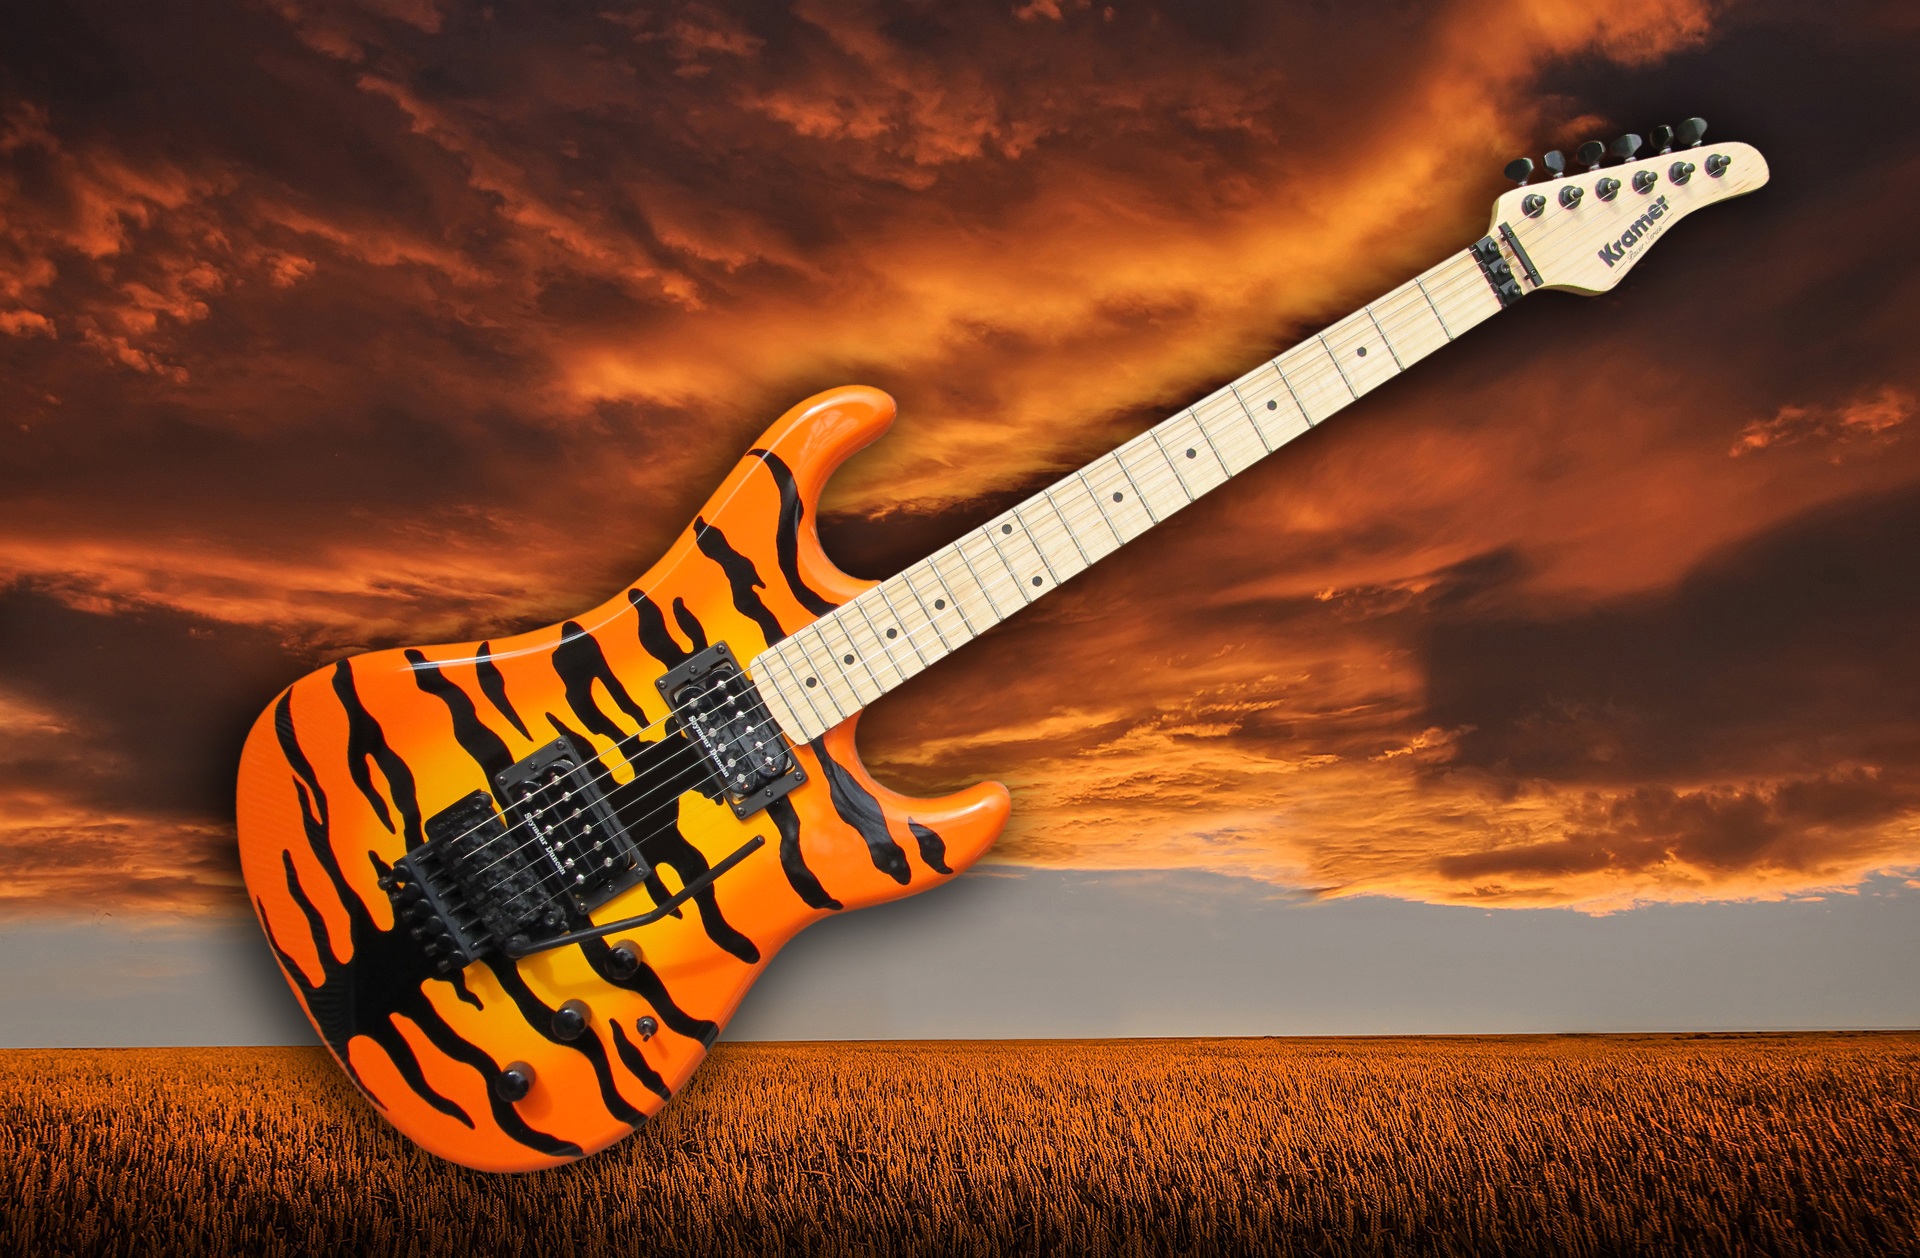 Tiger Stripe Electric guitar by bremslaeufer